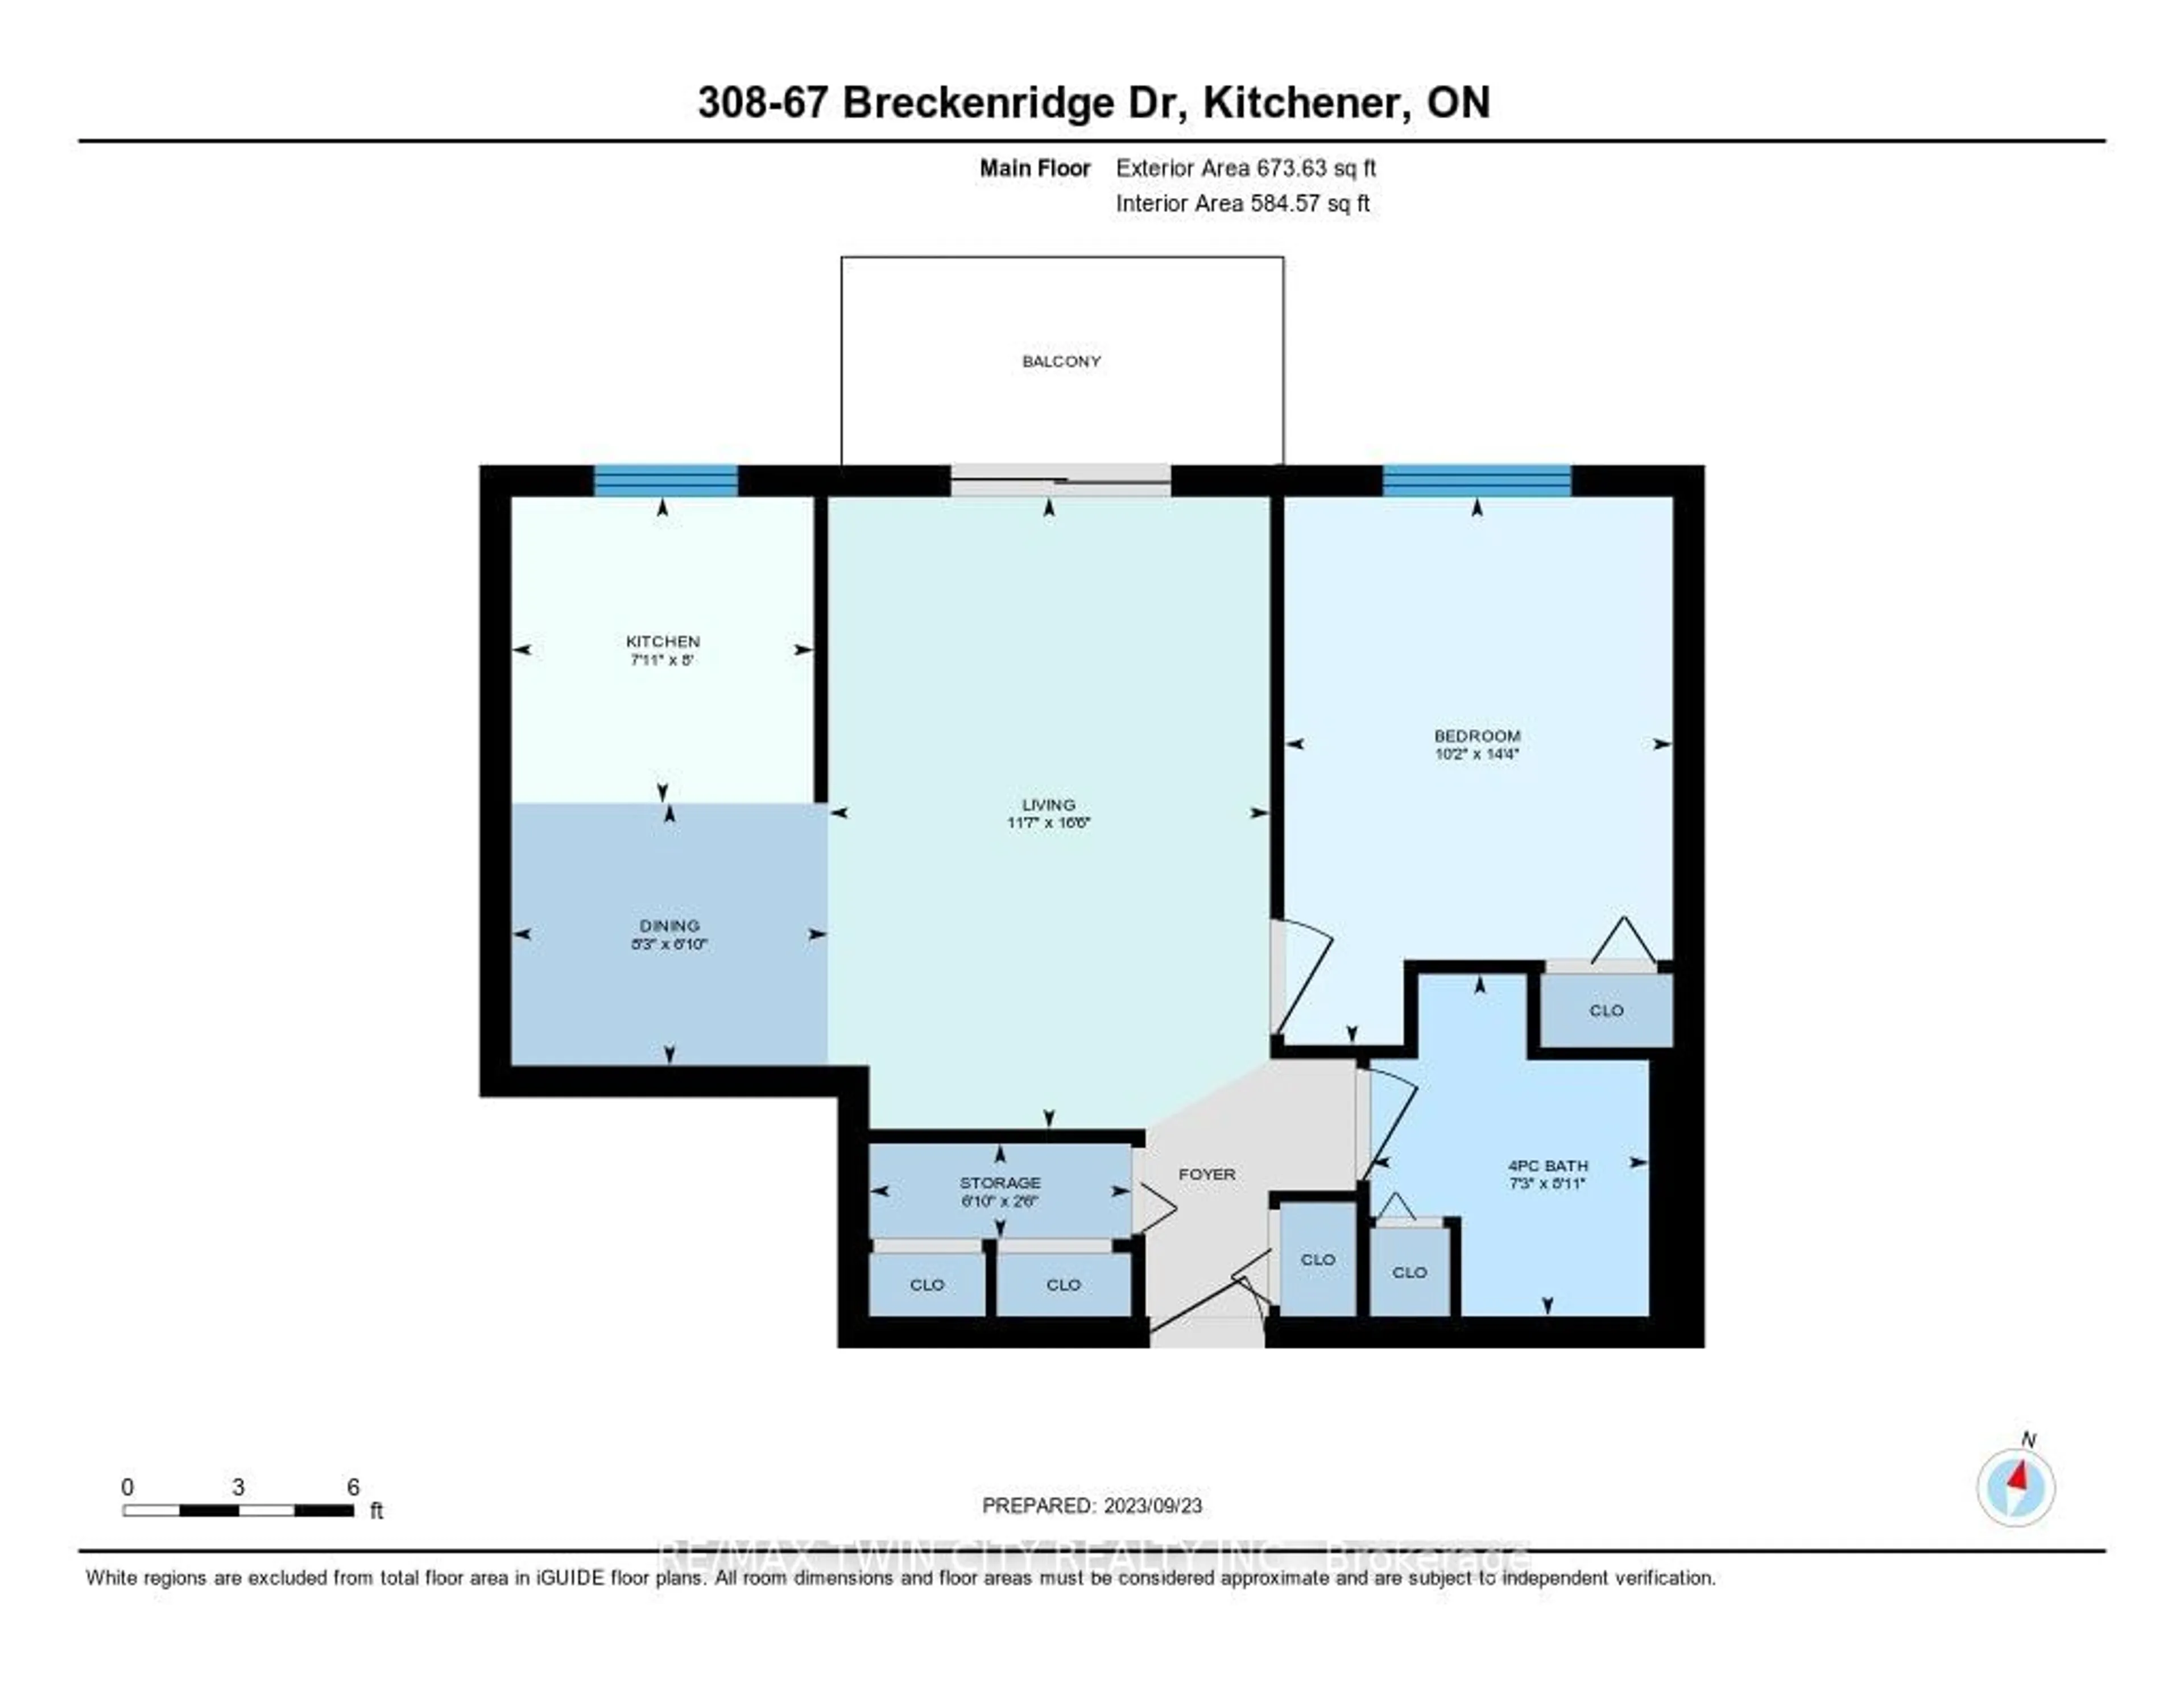 Floor plan for 67 Breckenridge Dr #308, Kitchener Ontario N2B 3R8